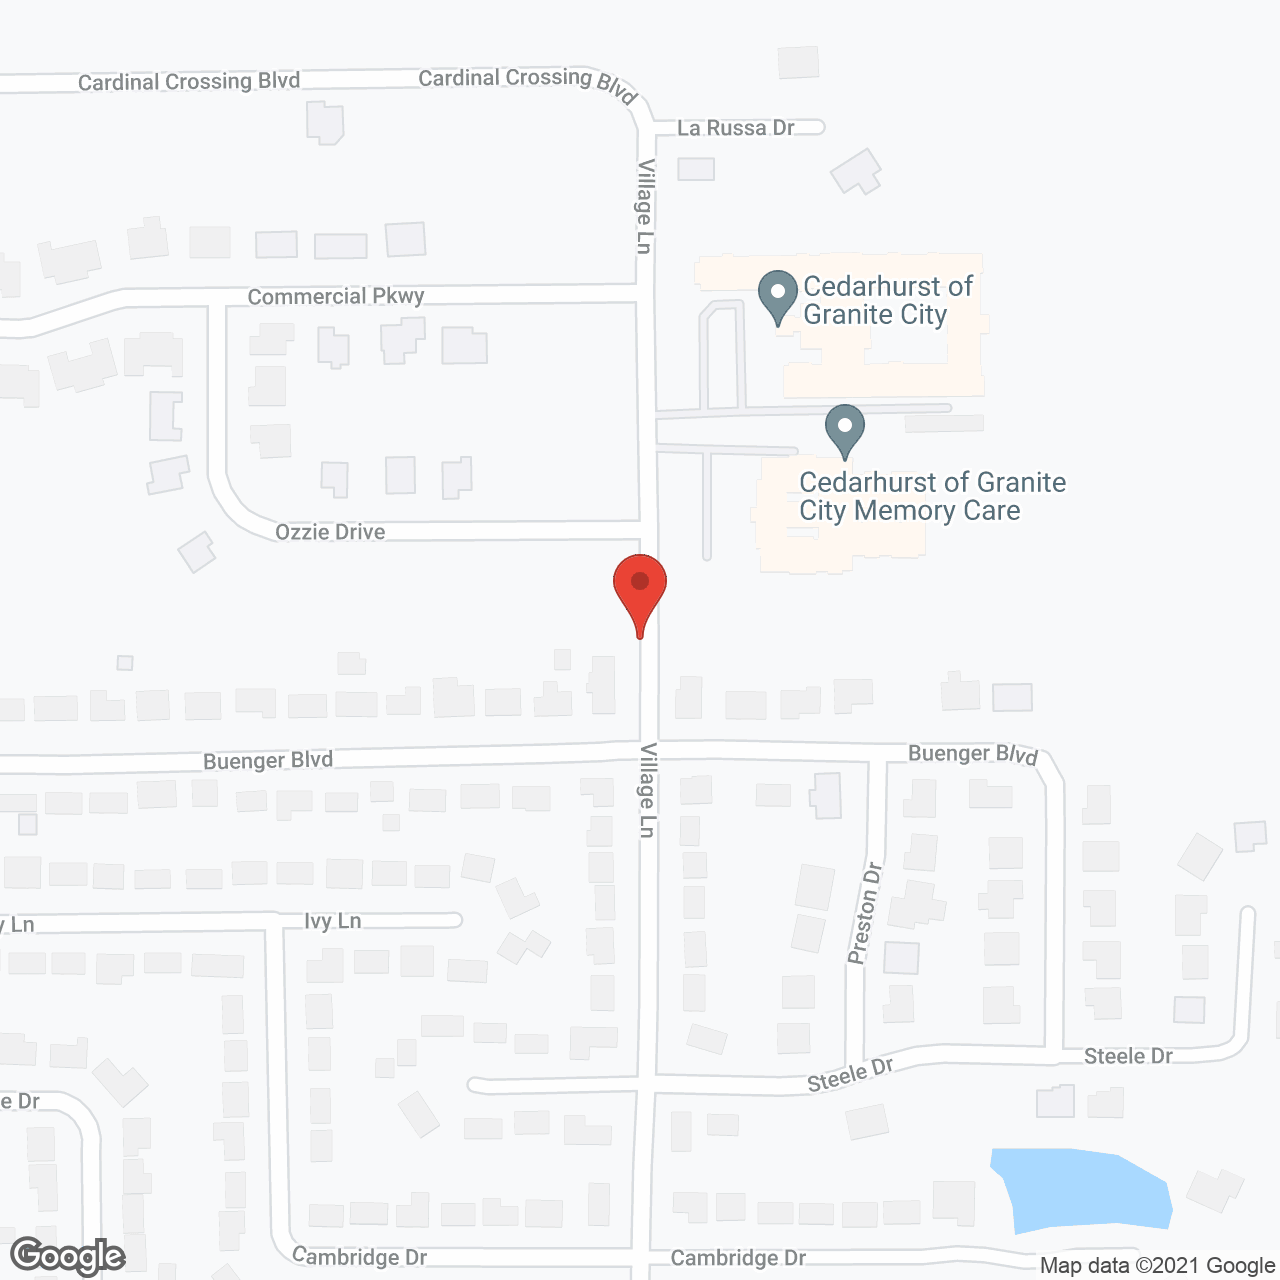 Cedarhurst of Granite City in google map